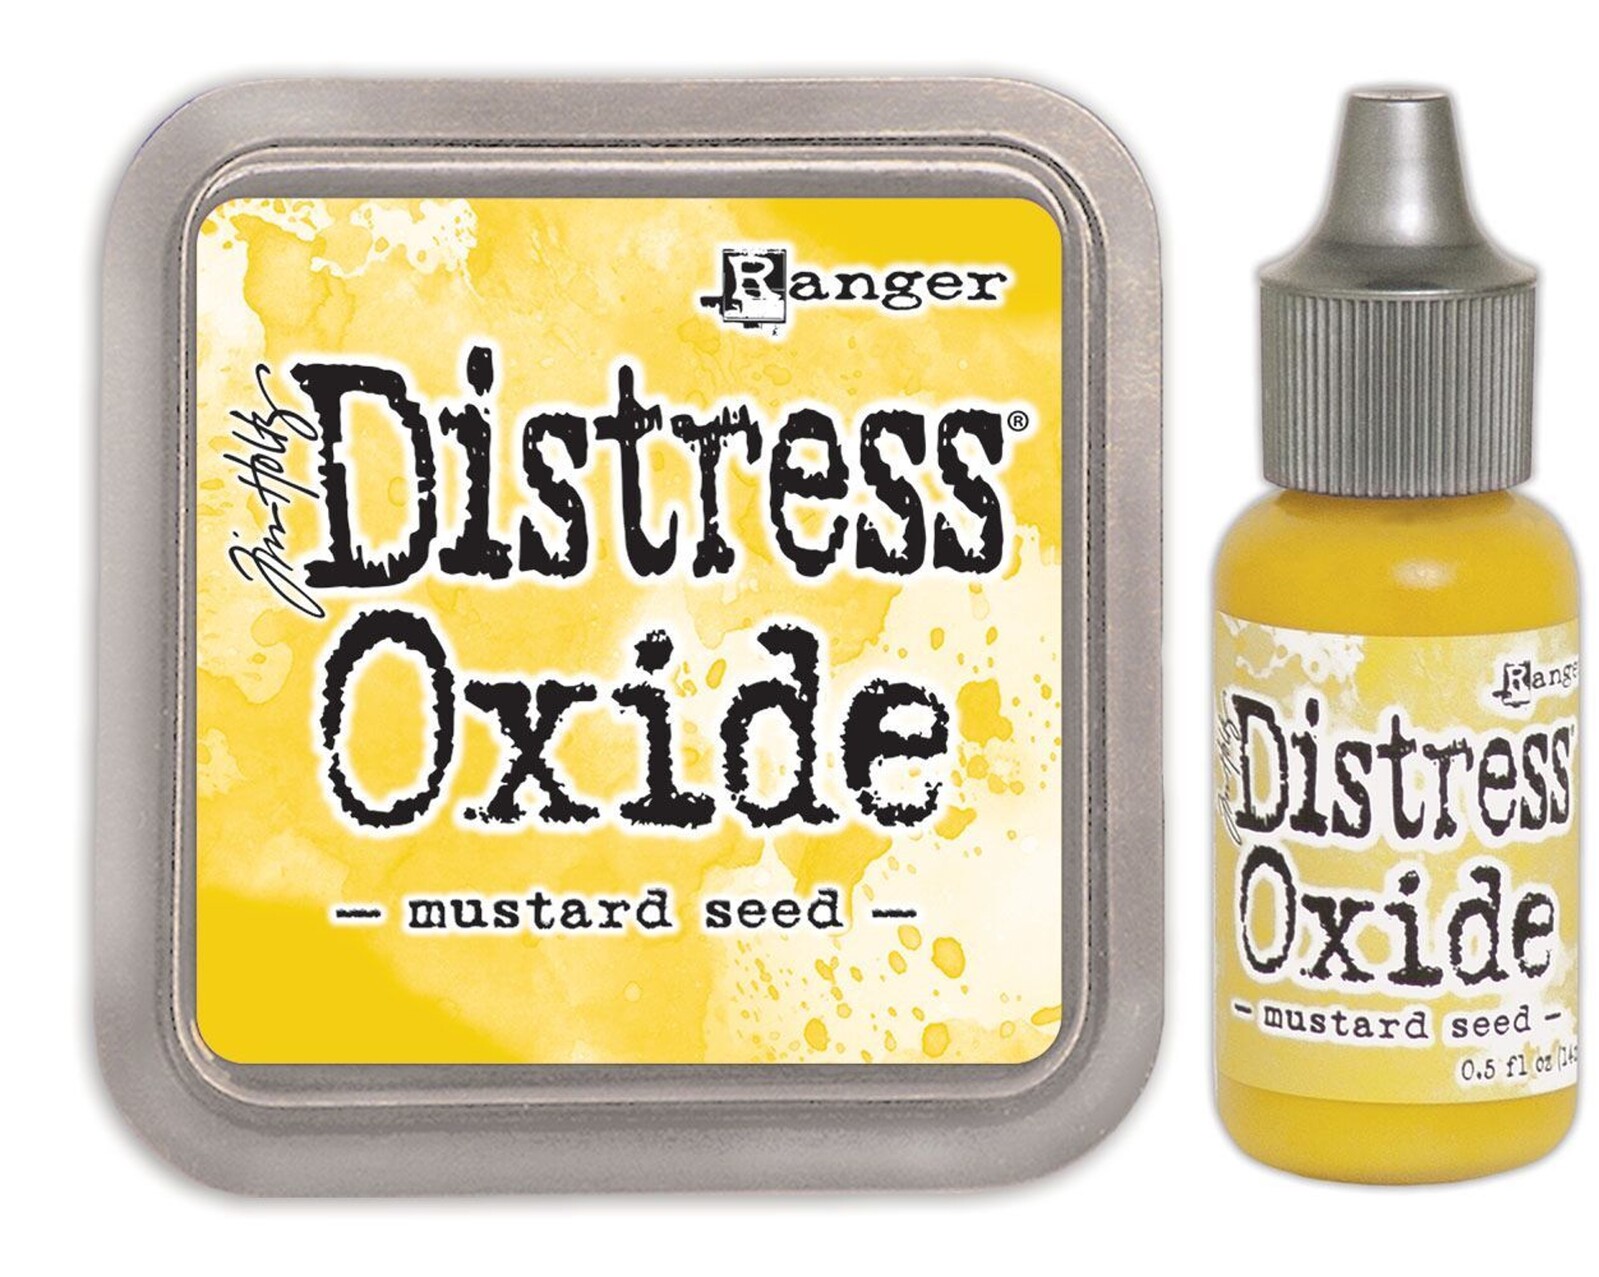 Tim Holtz Distress Oxide Ink Pad + Reinker Mustard Seed